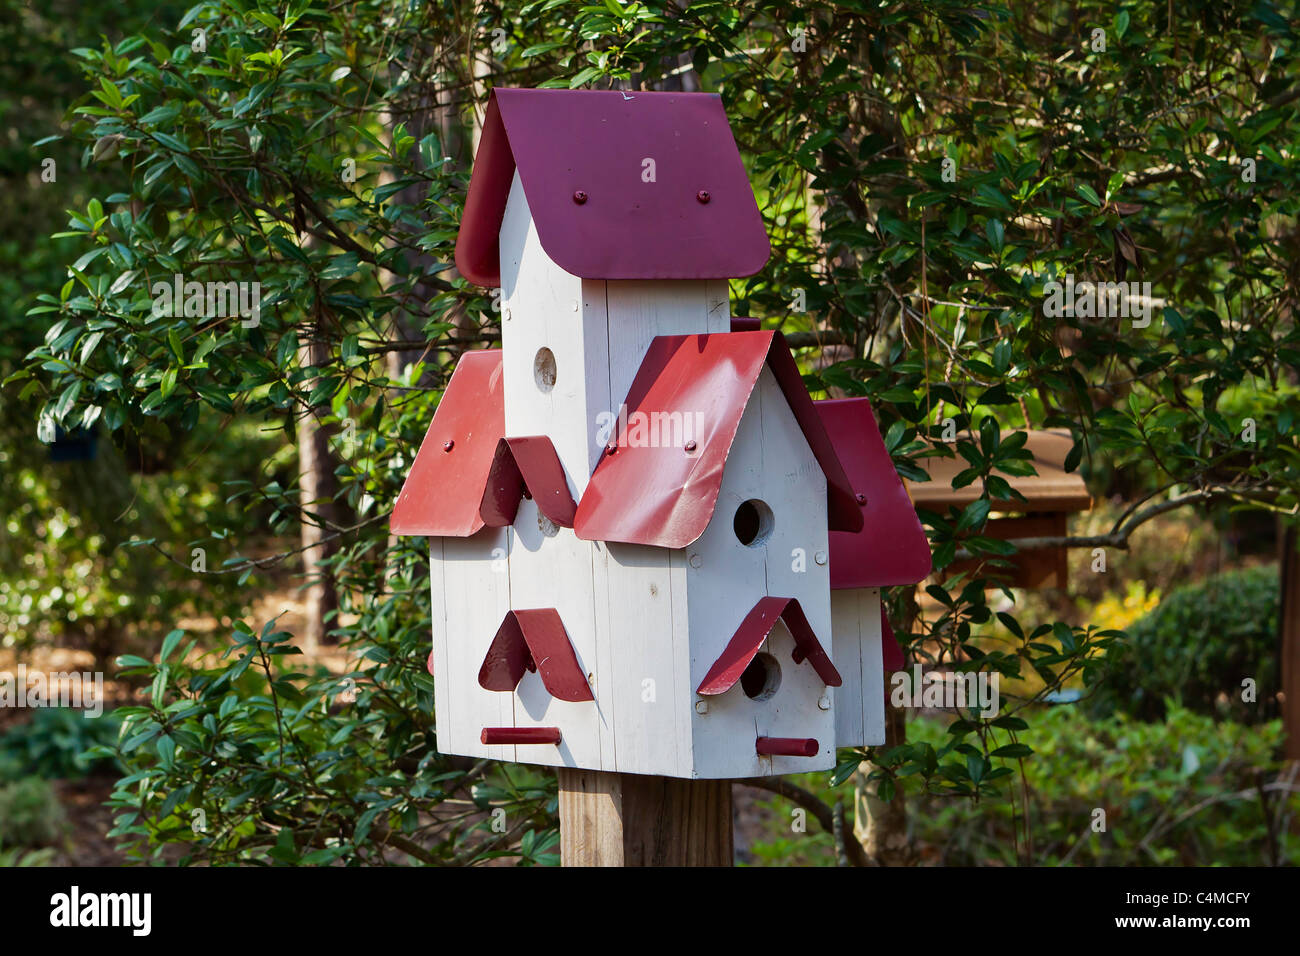 Garden birdhouse and landscaping. chriskirkphotography.net Stock Photo